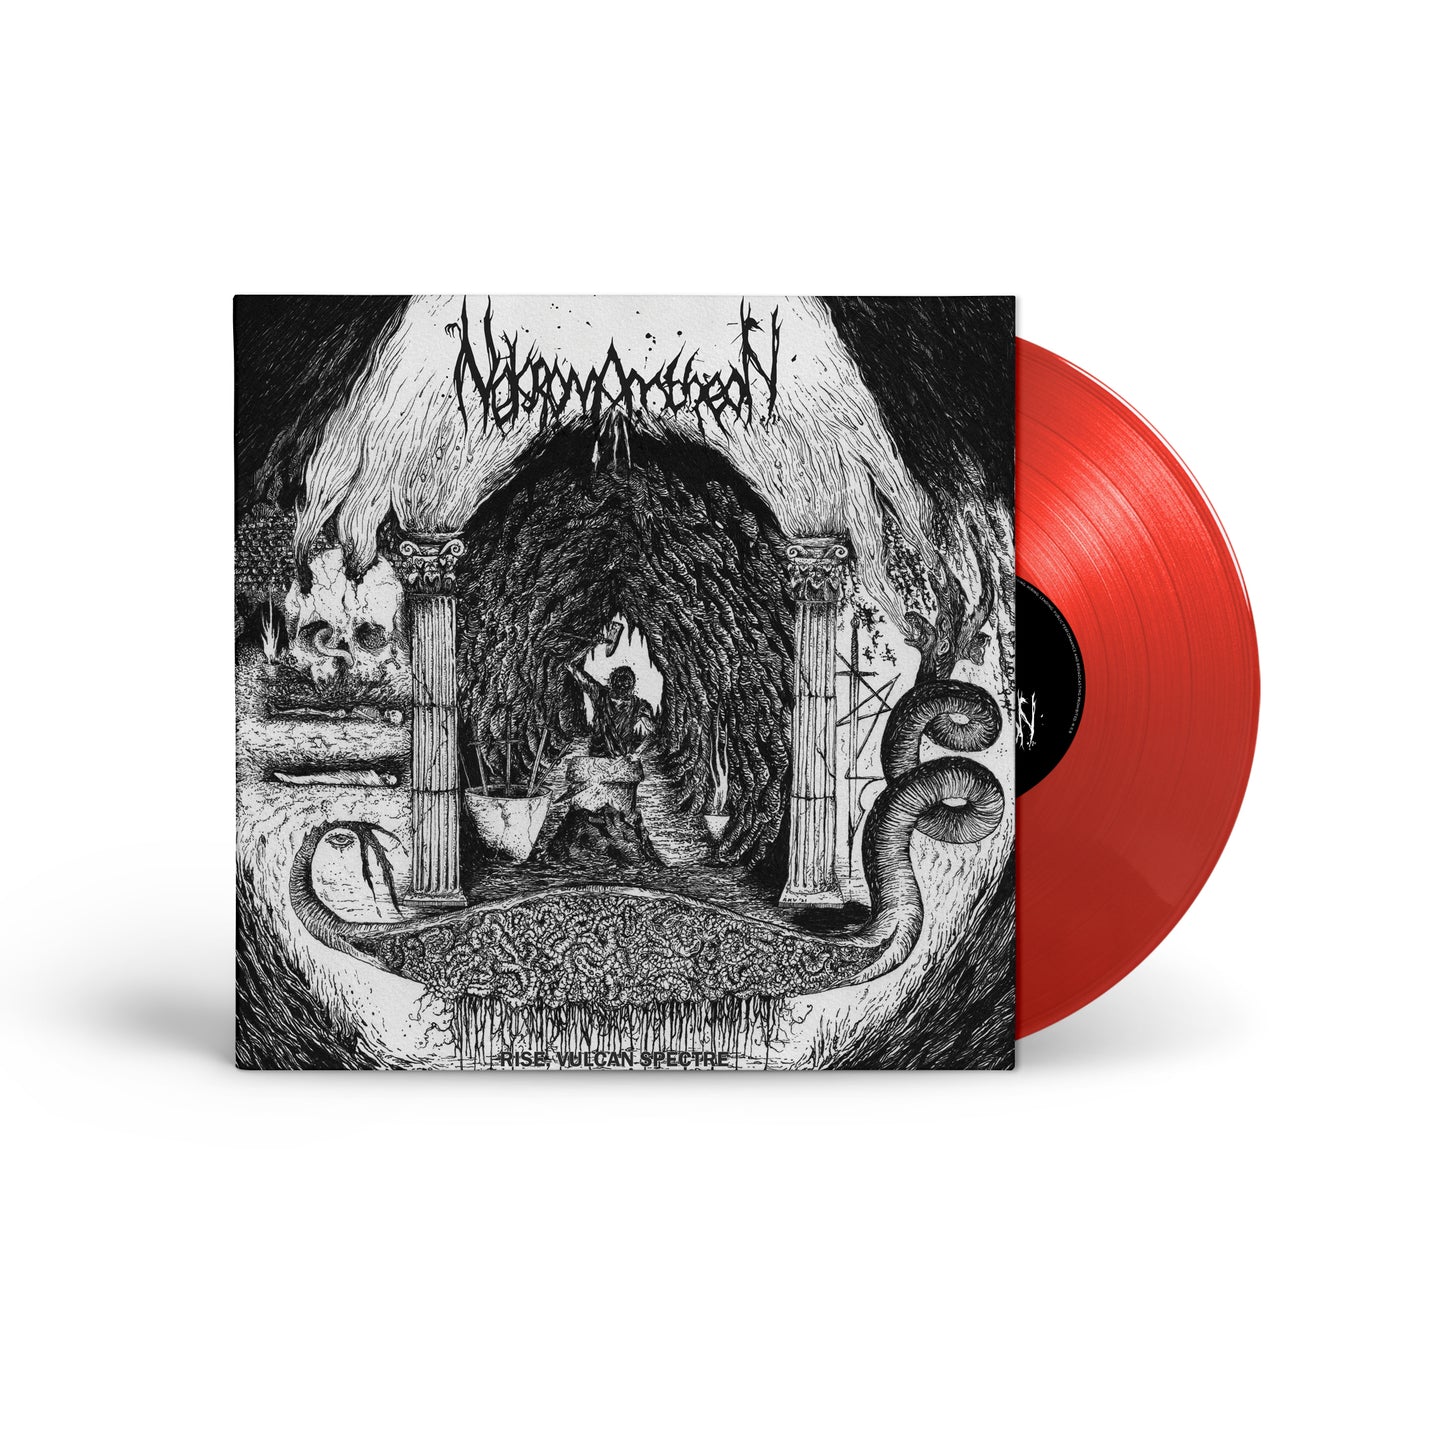 NEKROMANTHEON - Rise, Vulcan Spectre LP (RED) Reissue